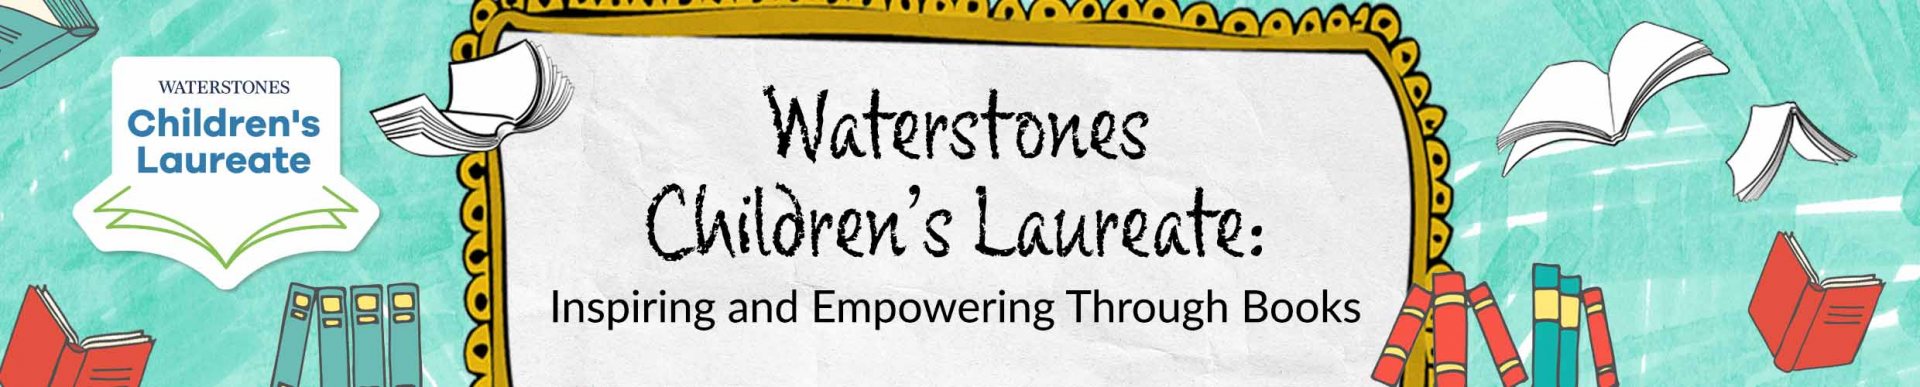 Waterstones Children's Laureate: Inspiring and empowering through books